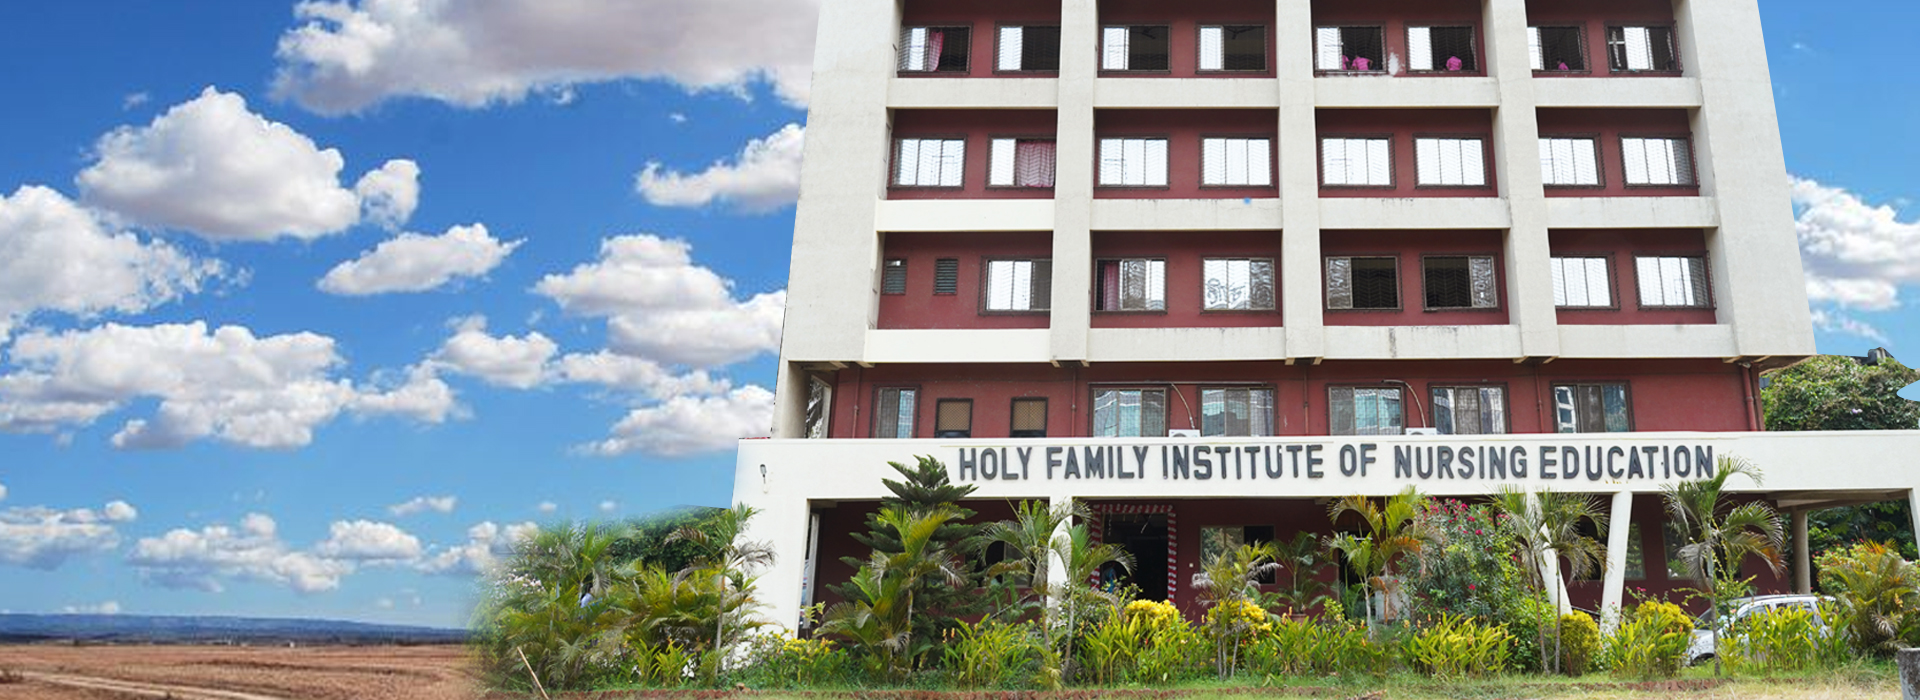 Holy Family Institute of Nursing Education 